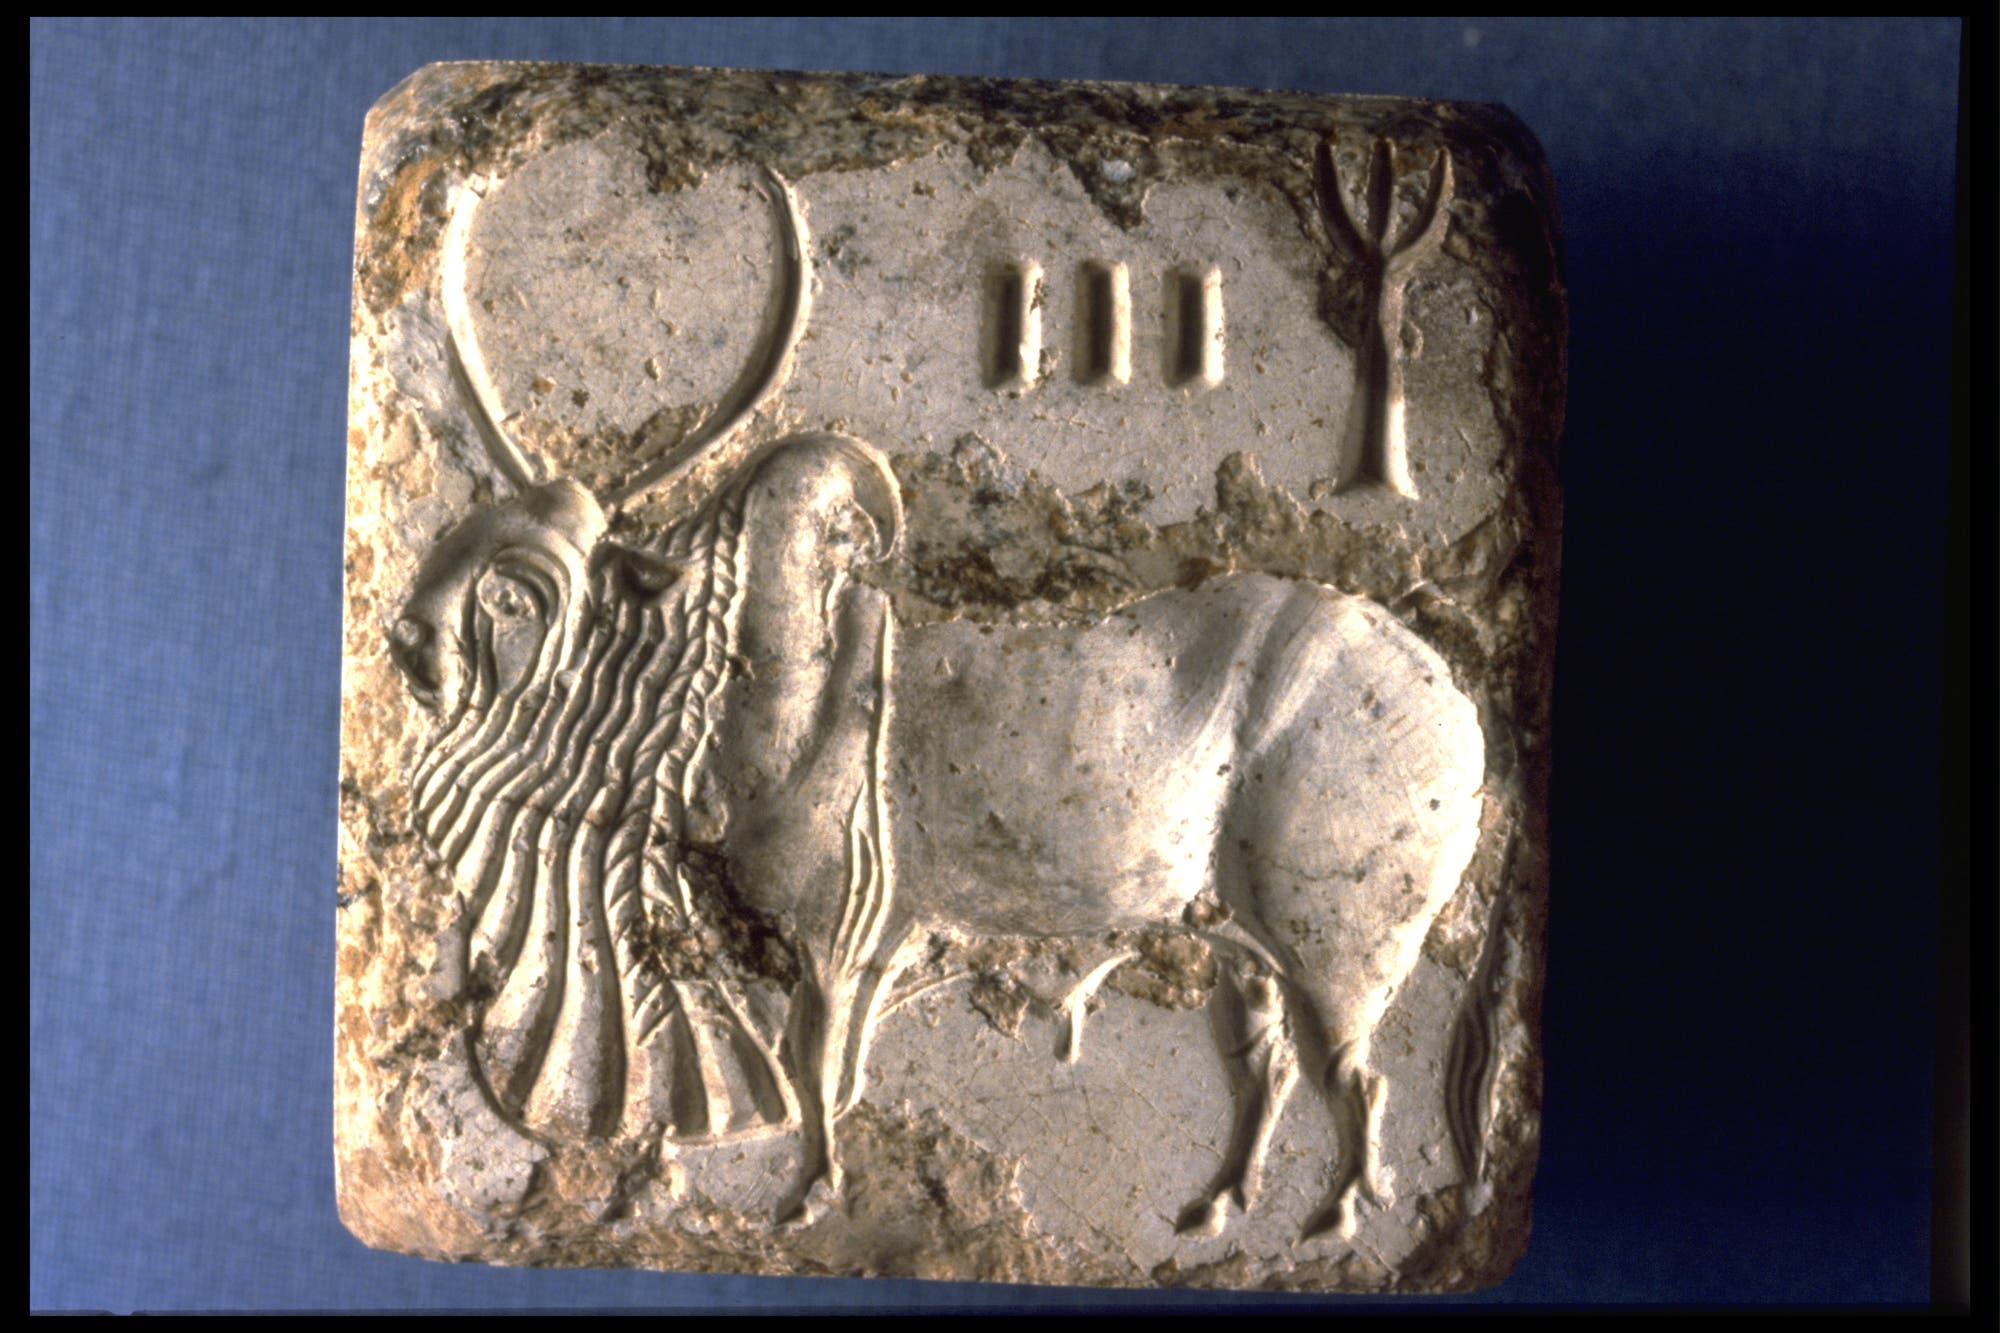 Hinterlassenschaft der Indus-Kultur